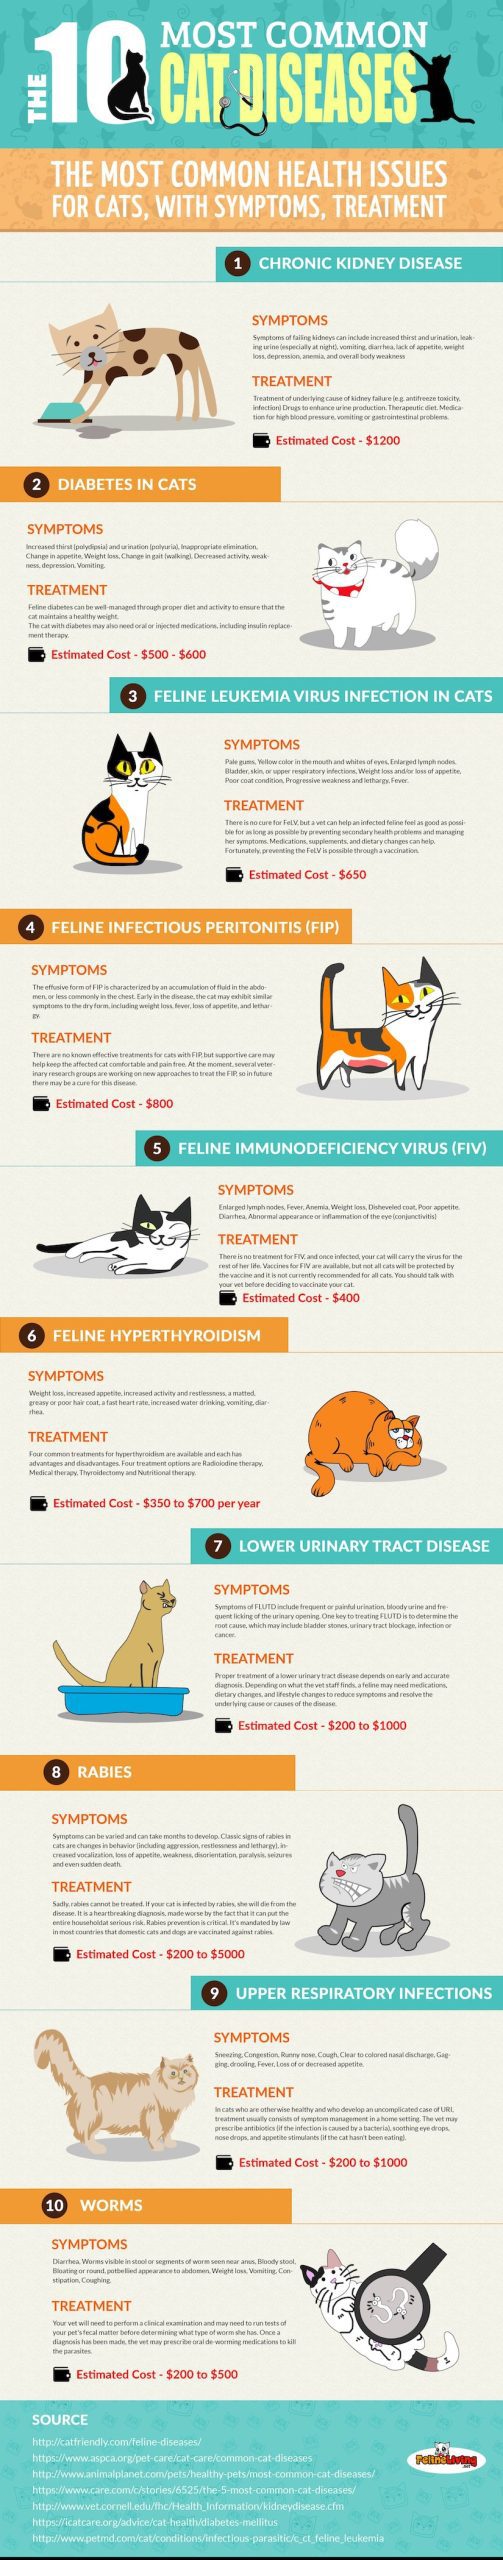 Symptoms of various diseases in cats